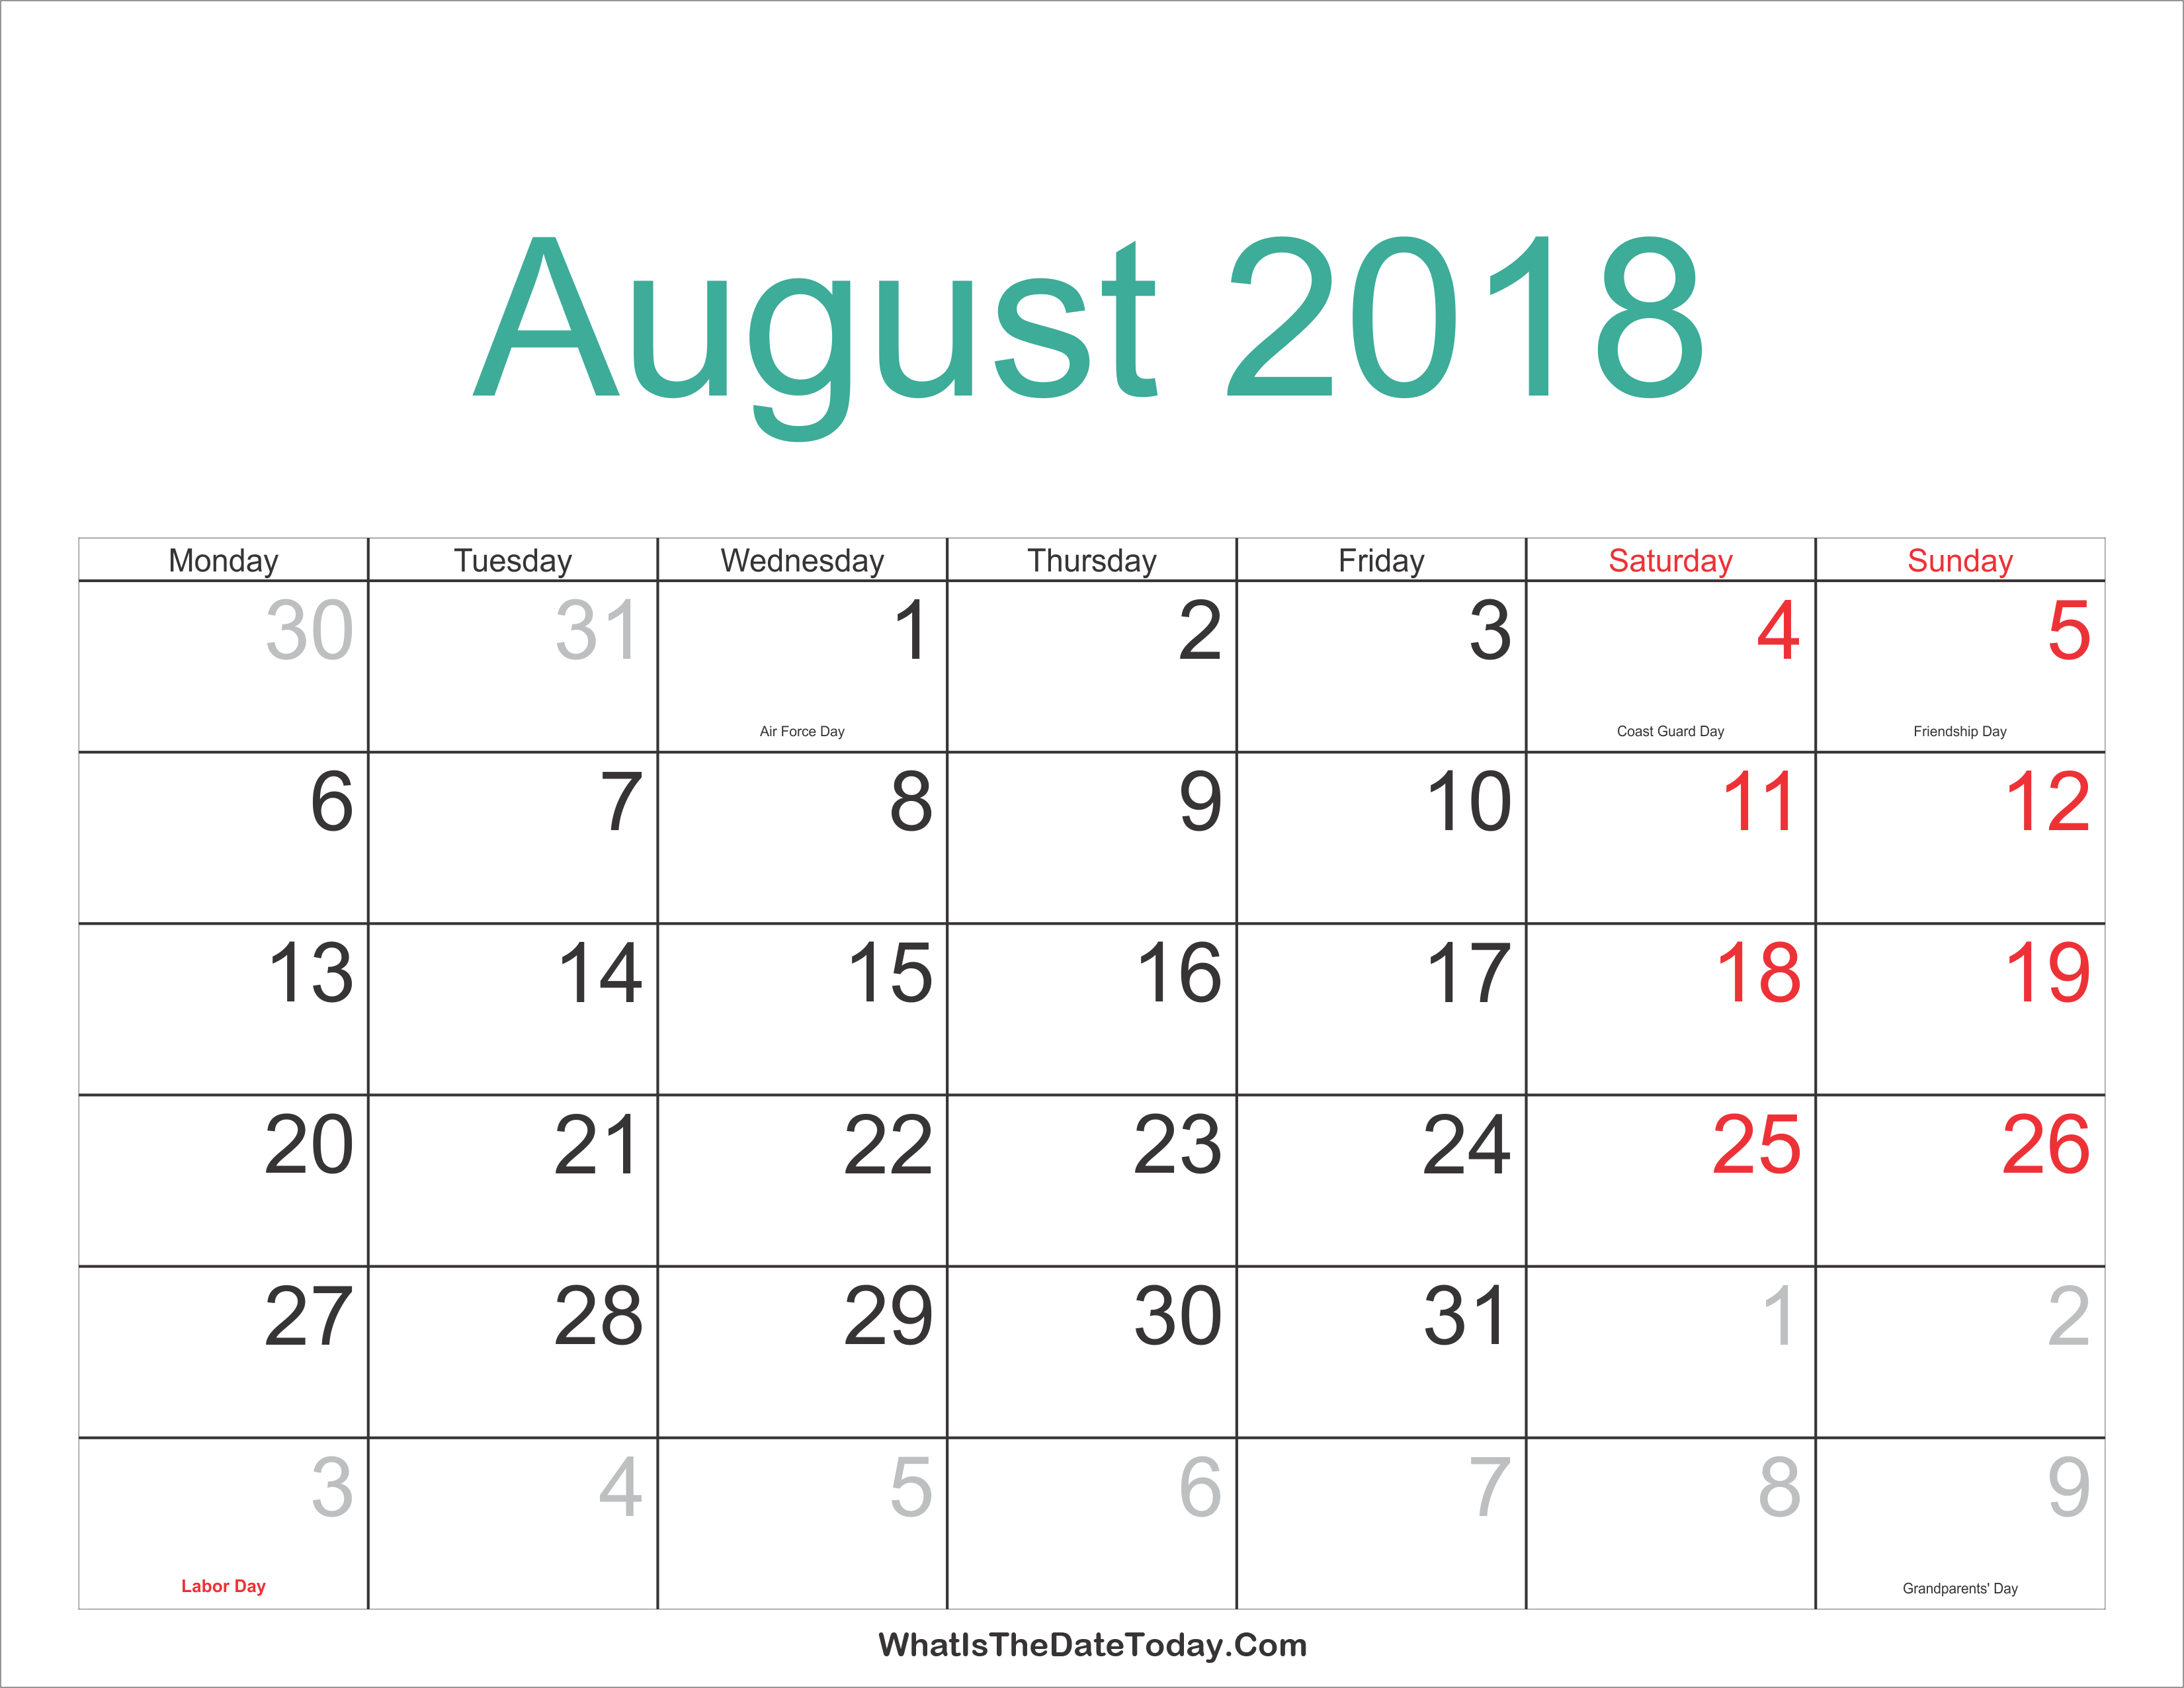 dentrodabiblia-2018-august-calendar-template